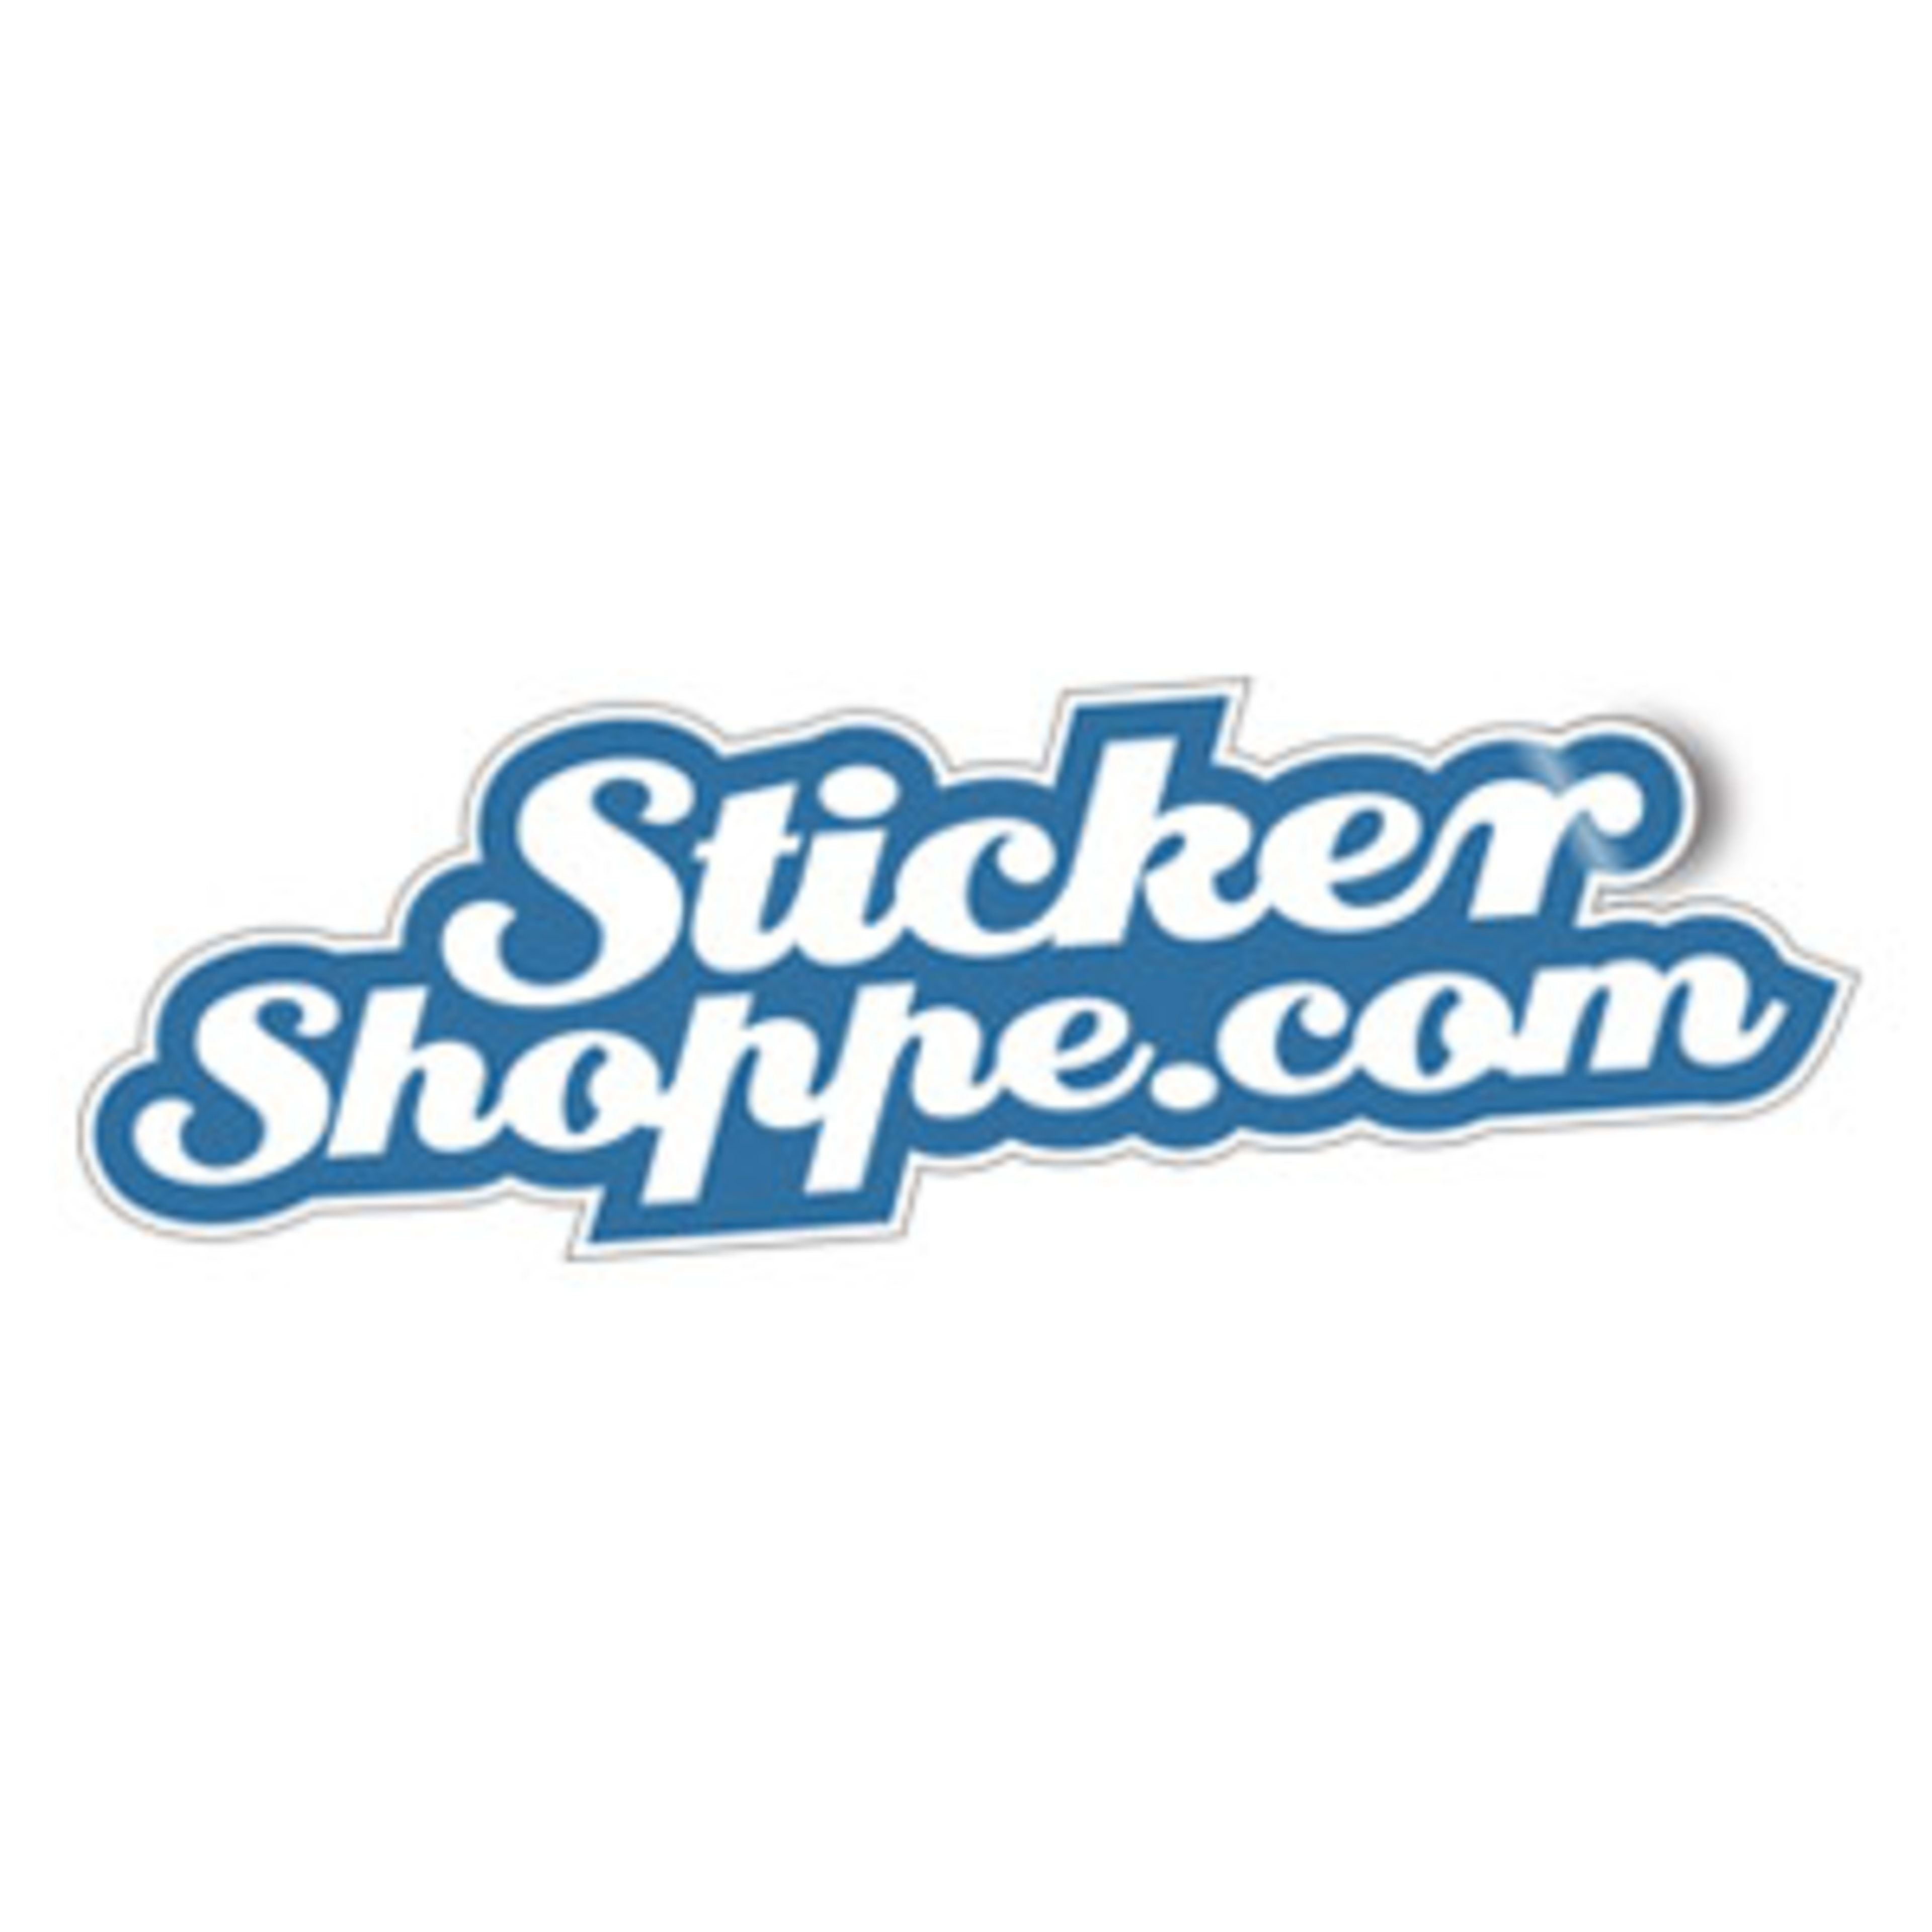 StickerShoppe.comCode